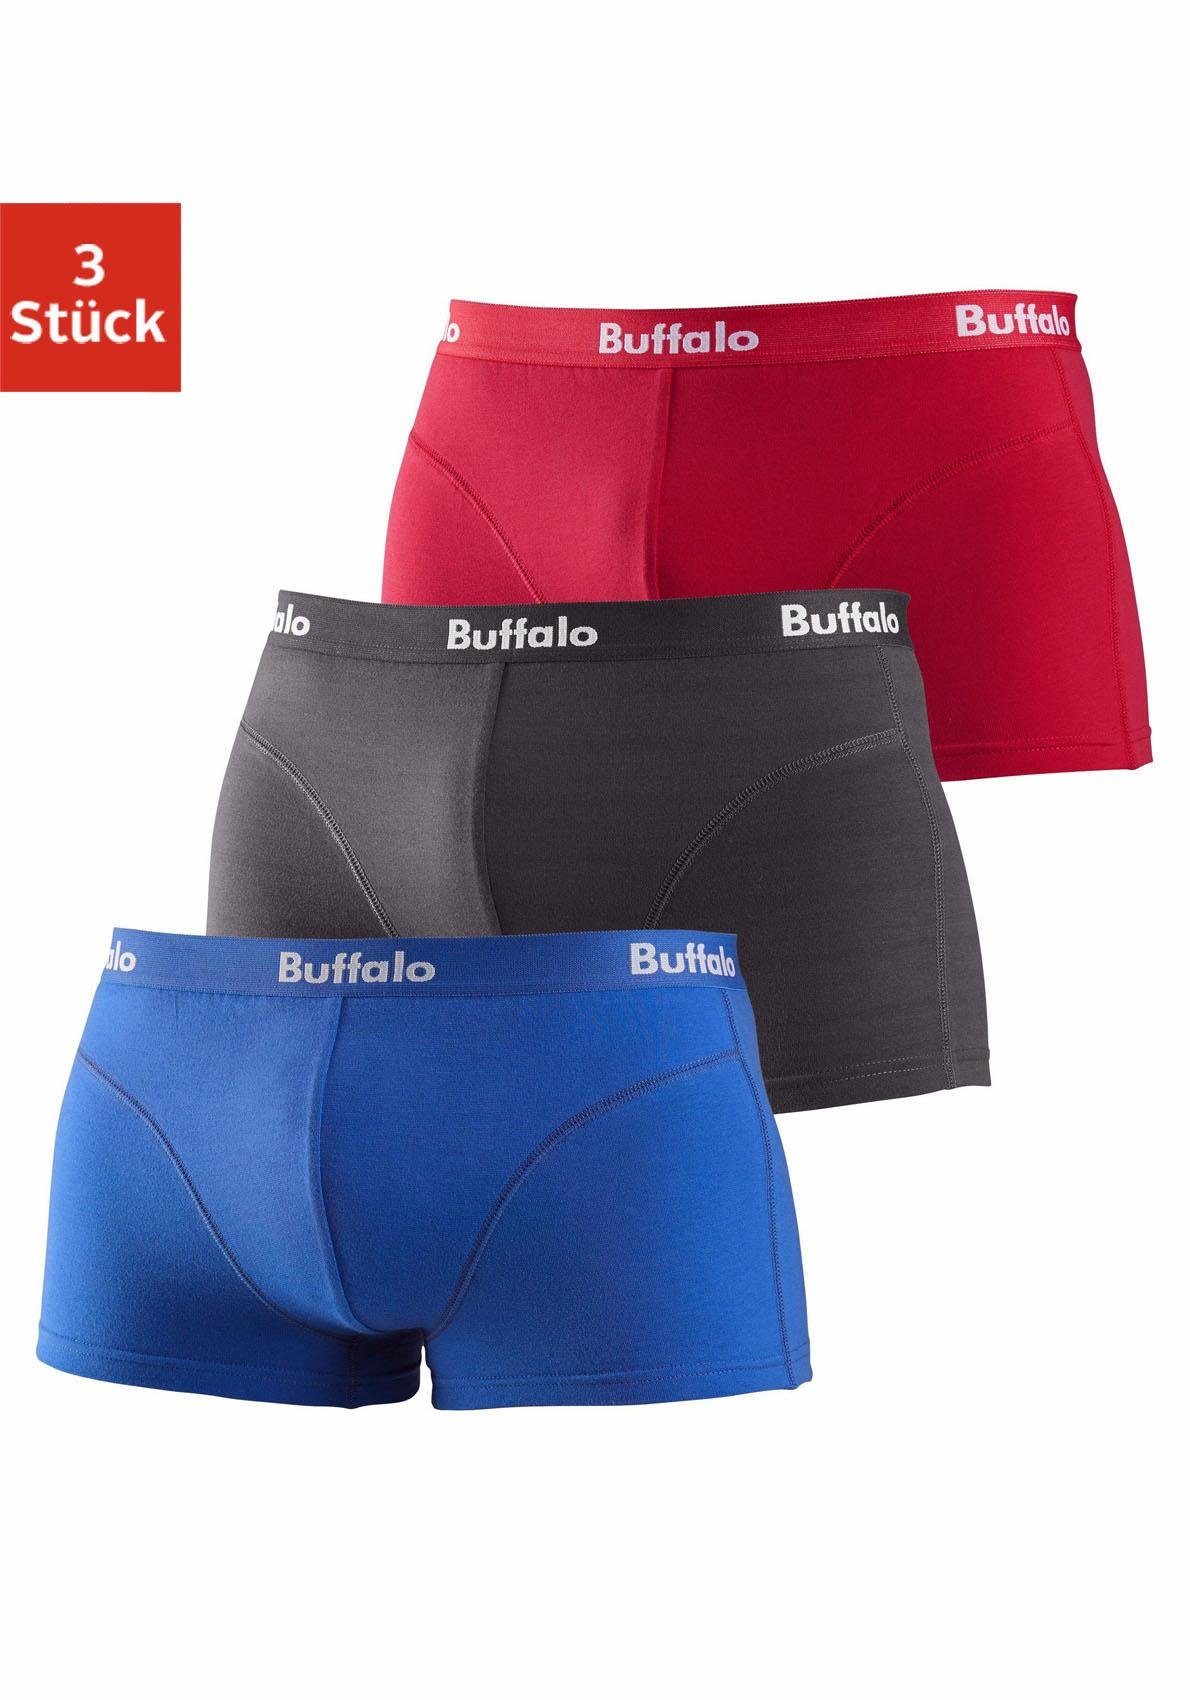 Buffalo Hipster (Packung, 3-St) mit Overlock-Nähten vorn rot, royalblau, anthrazit